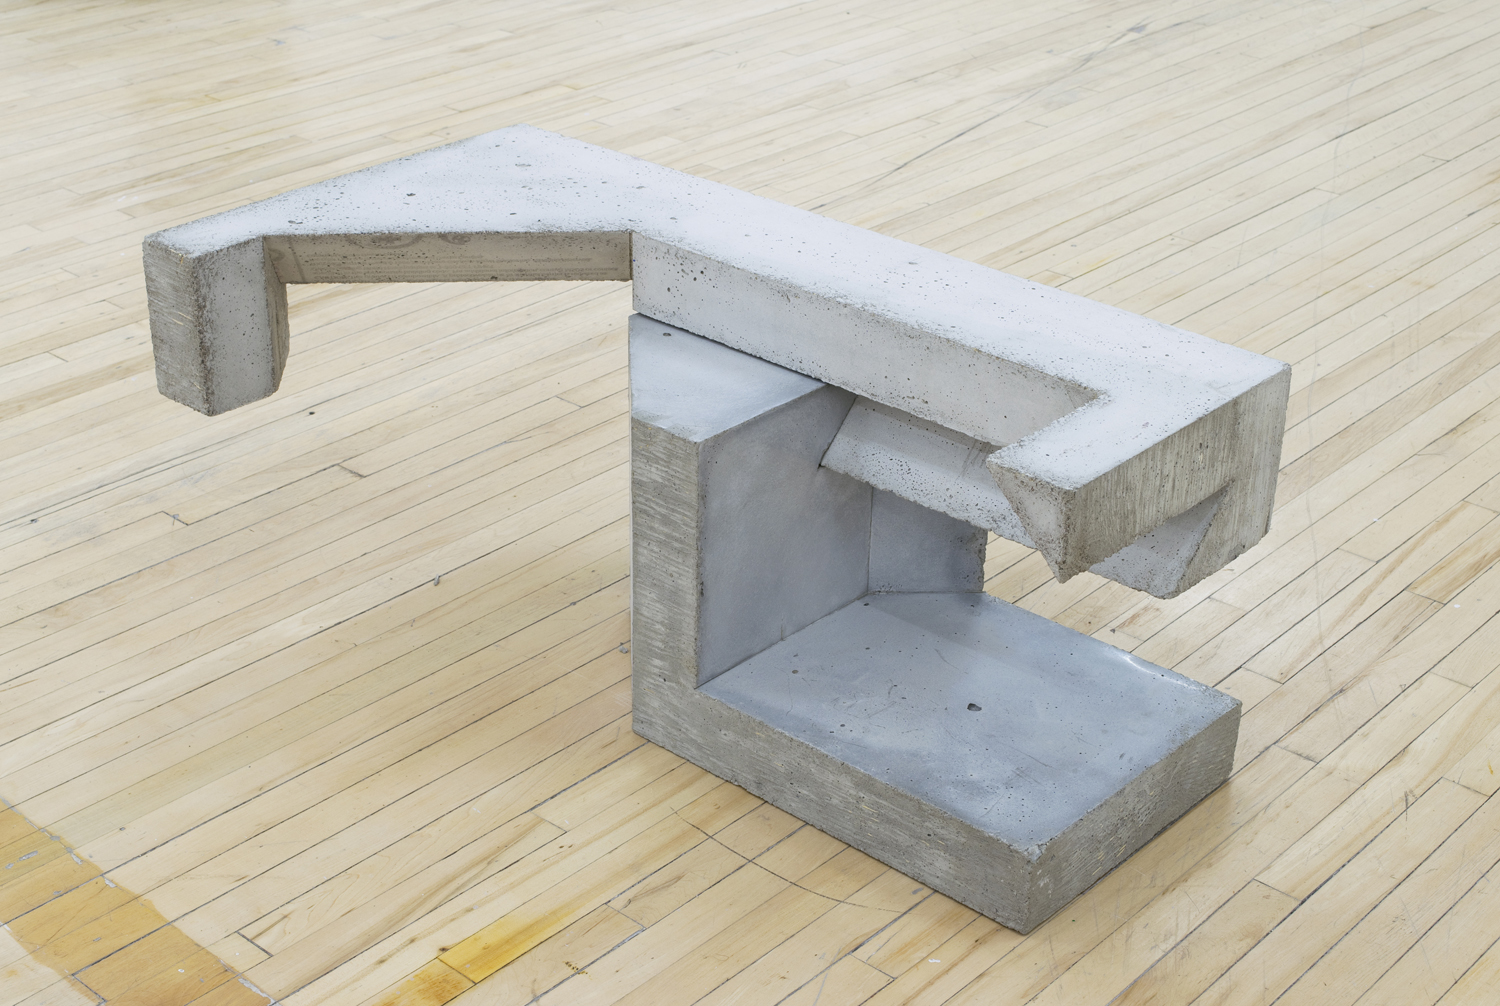   Falkeen , 2015, concrete and foam, 15 x 35 x 18 in 